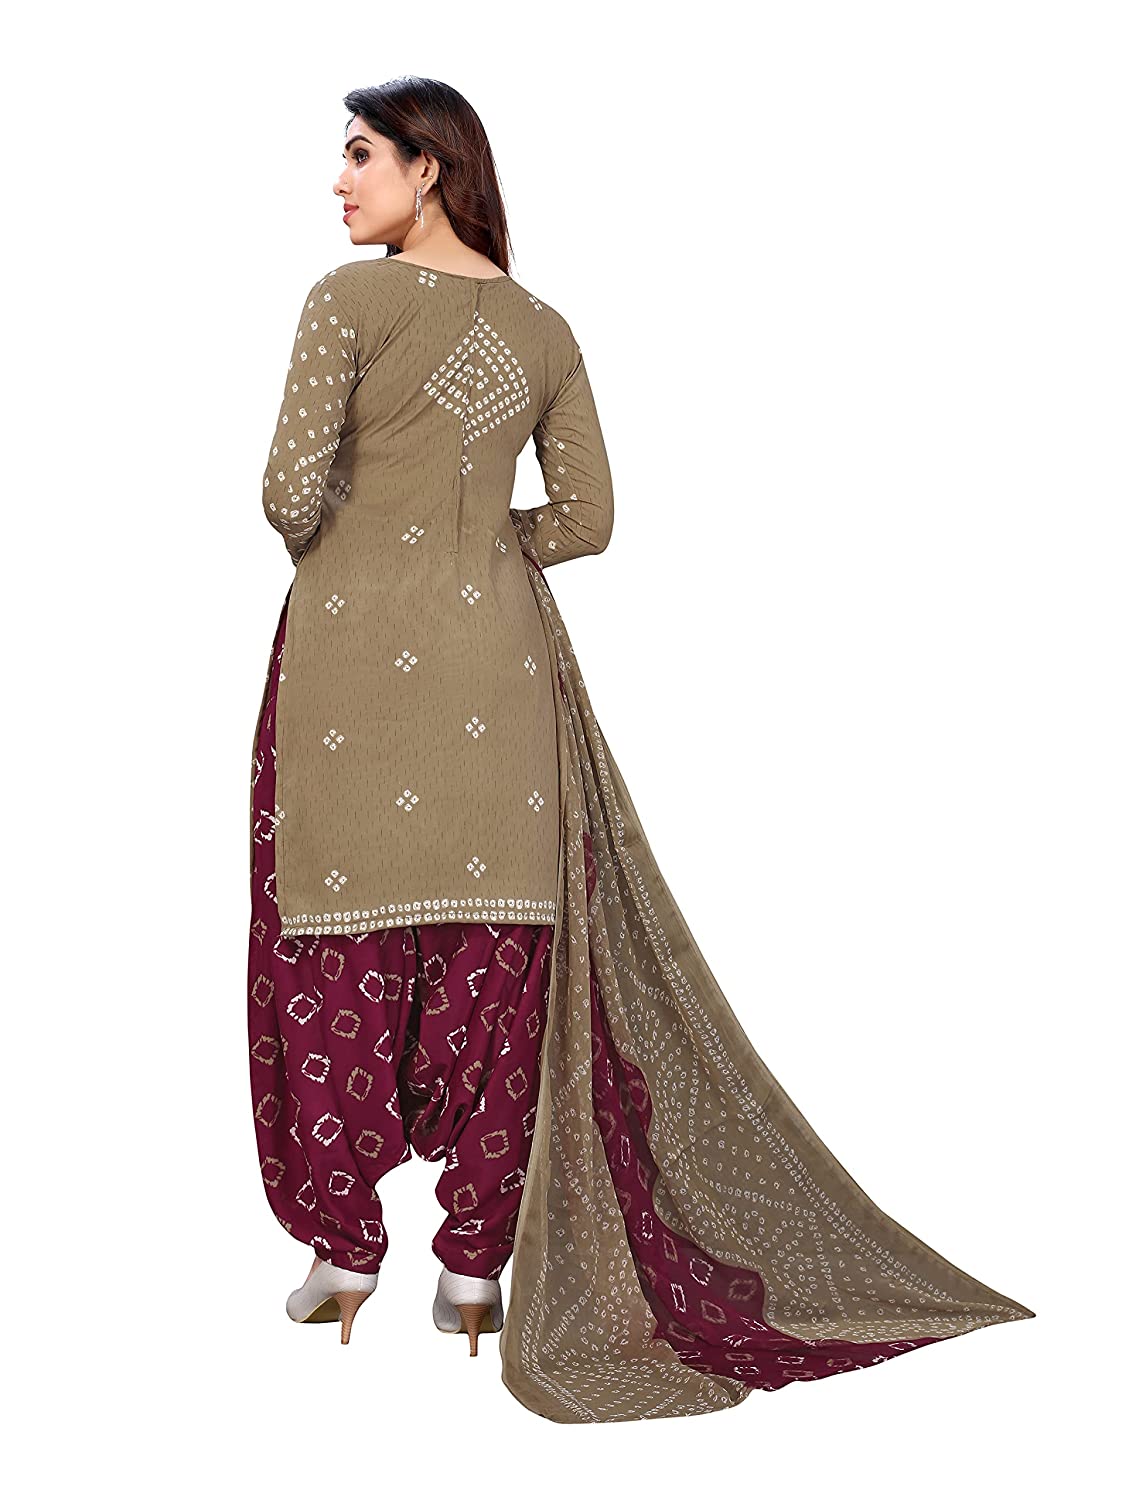 Buy Patiala Salwar Suit Mirror Faux Georgette in Blue Online